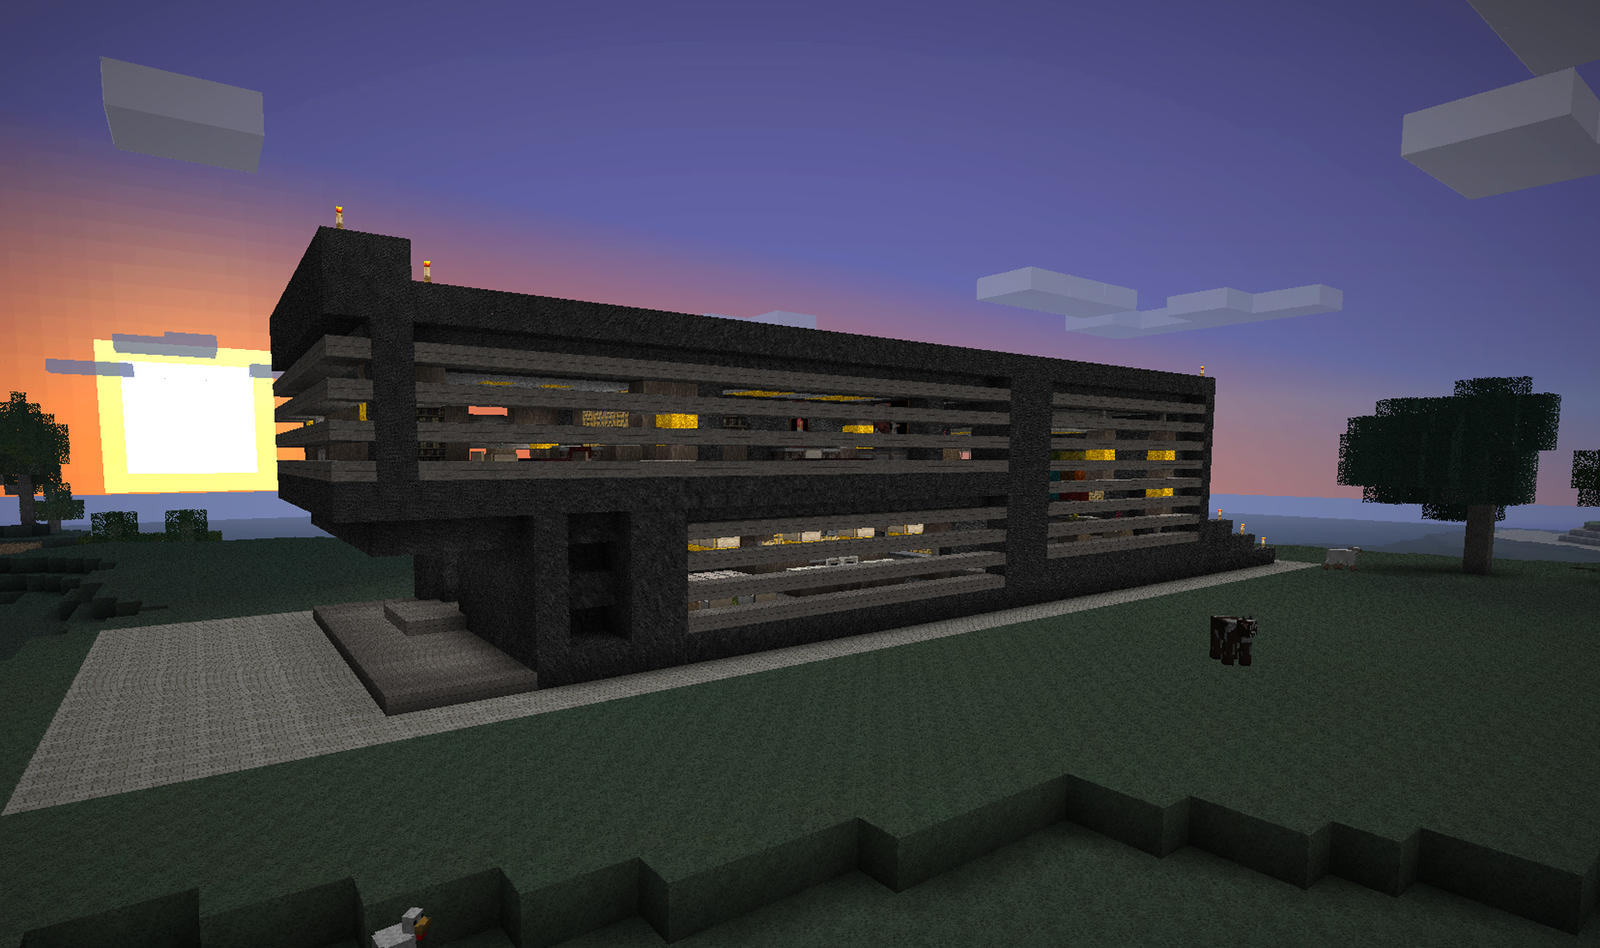 Simple Minecraft Houses